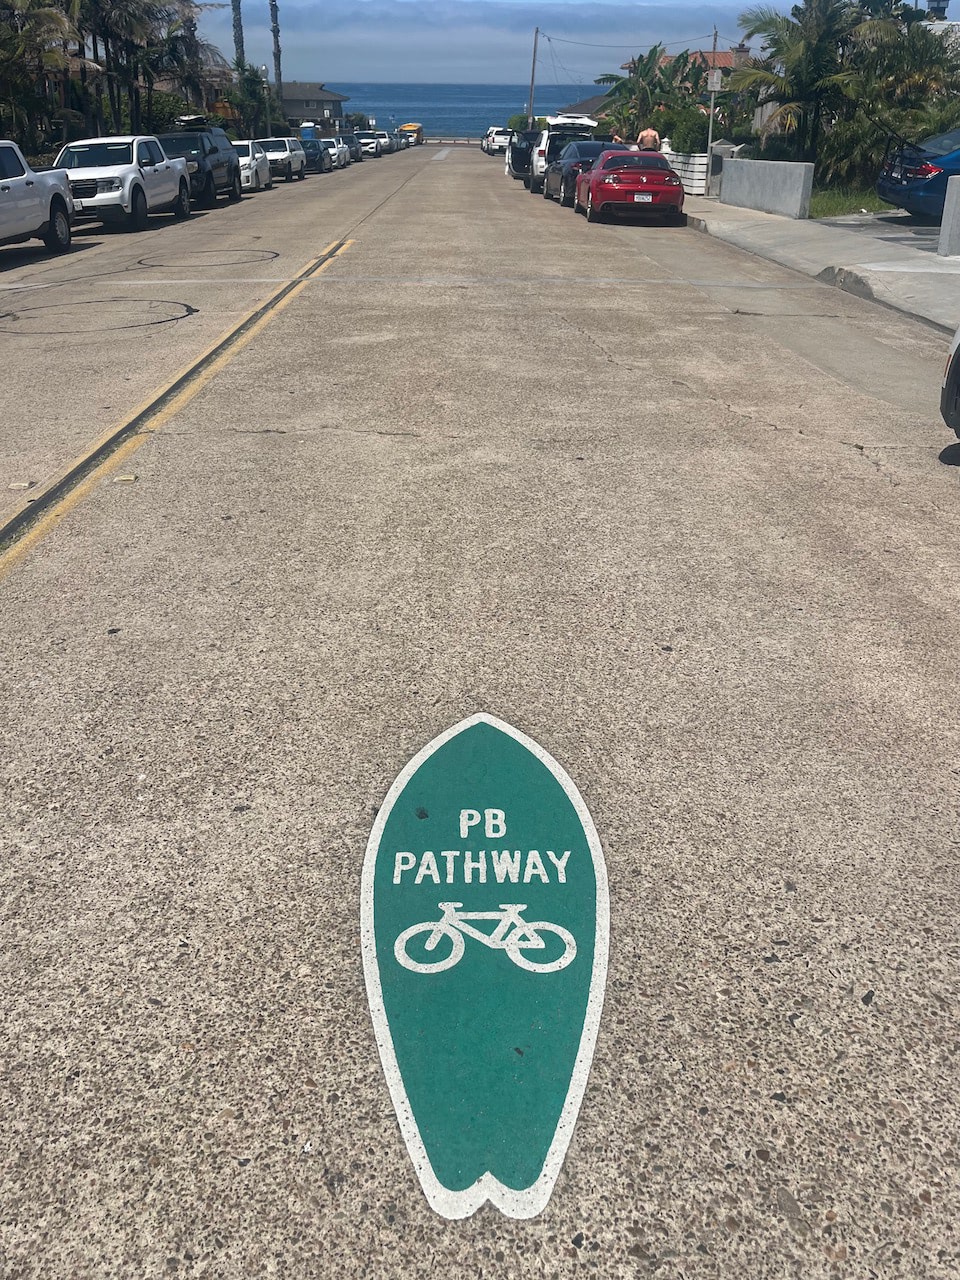 PB Pathway sign marking on the street